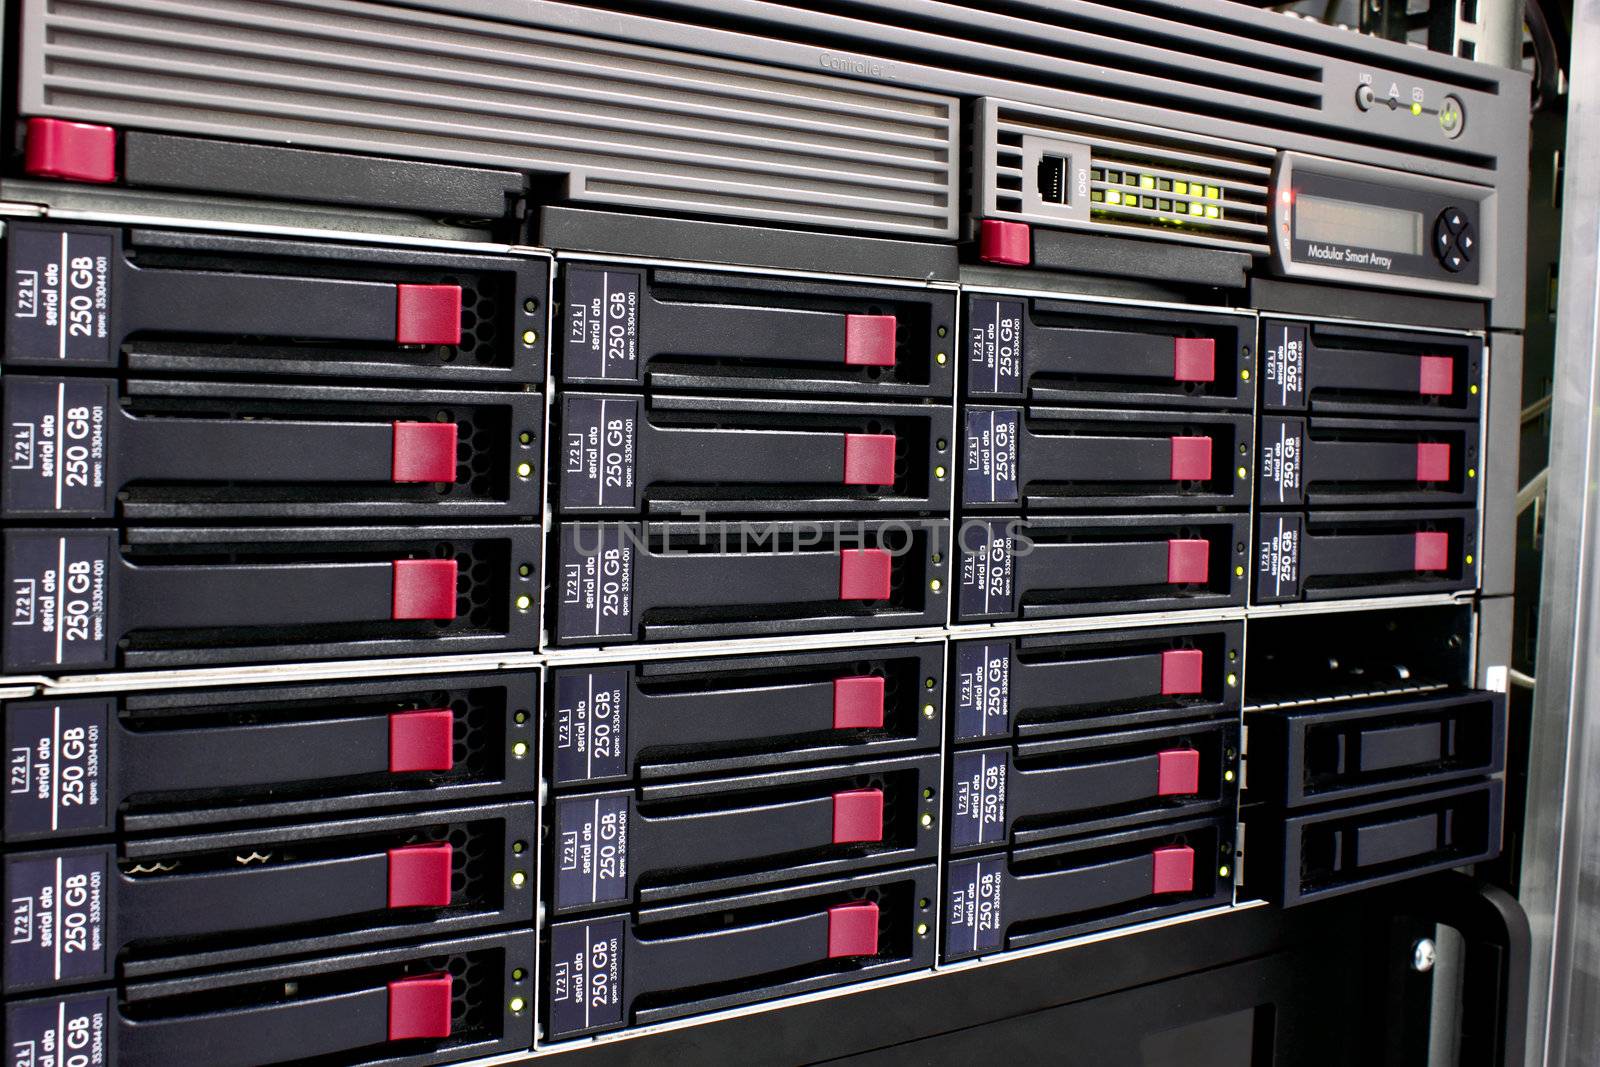 data storage rack by artush